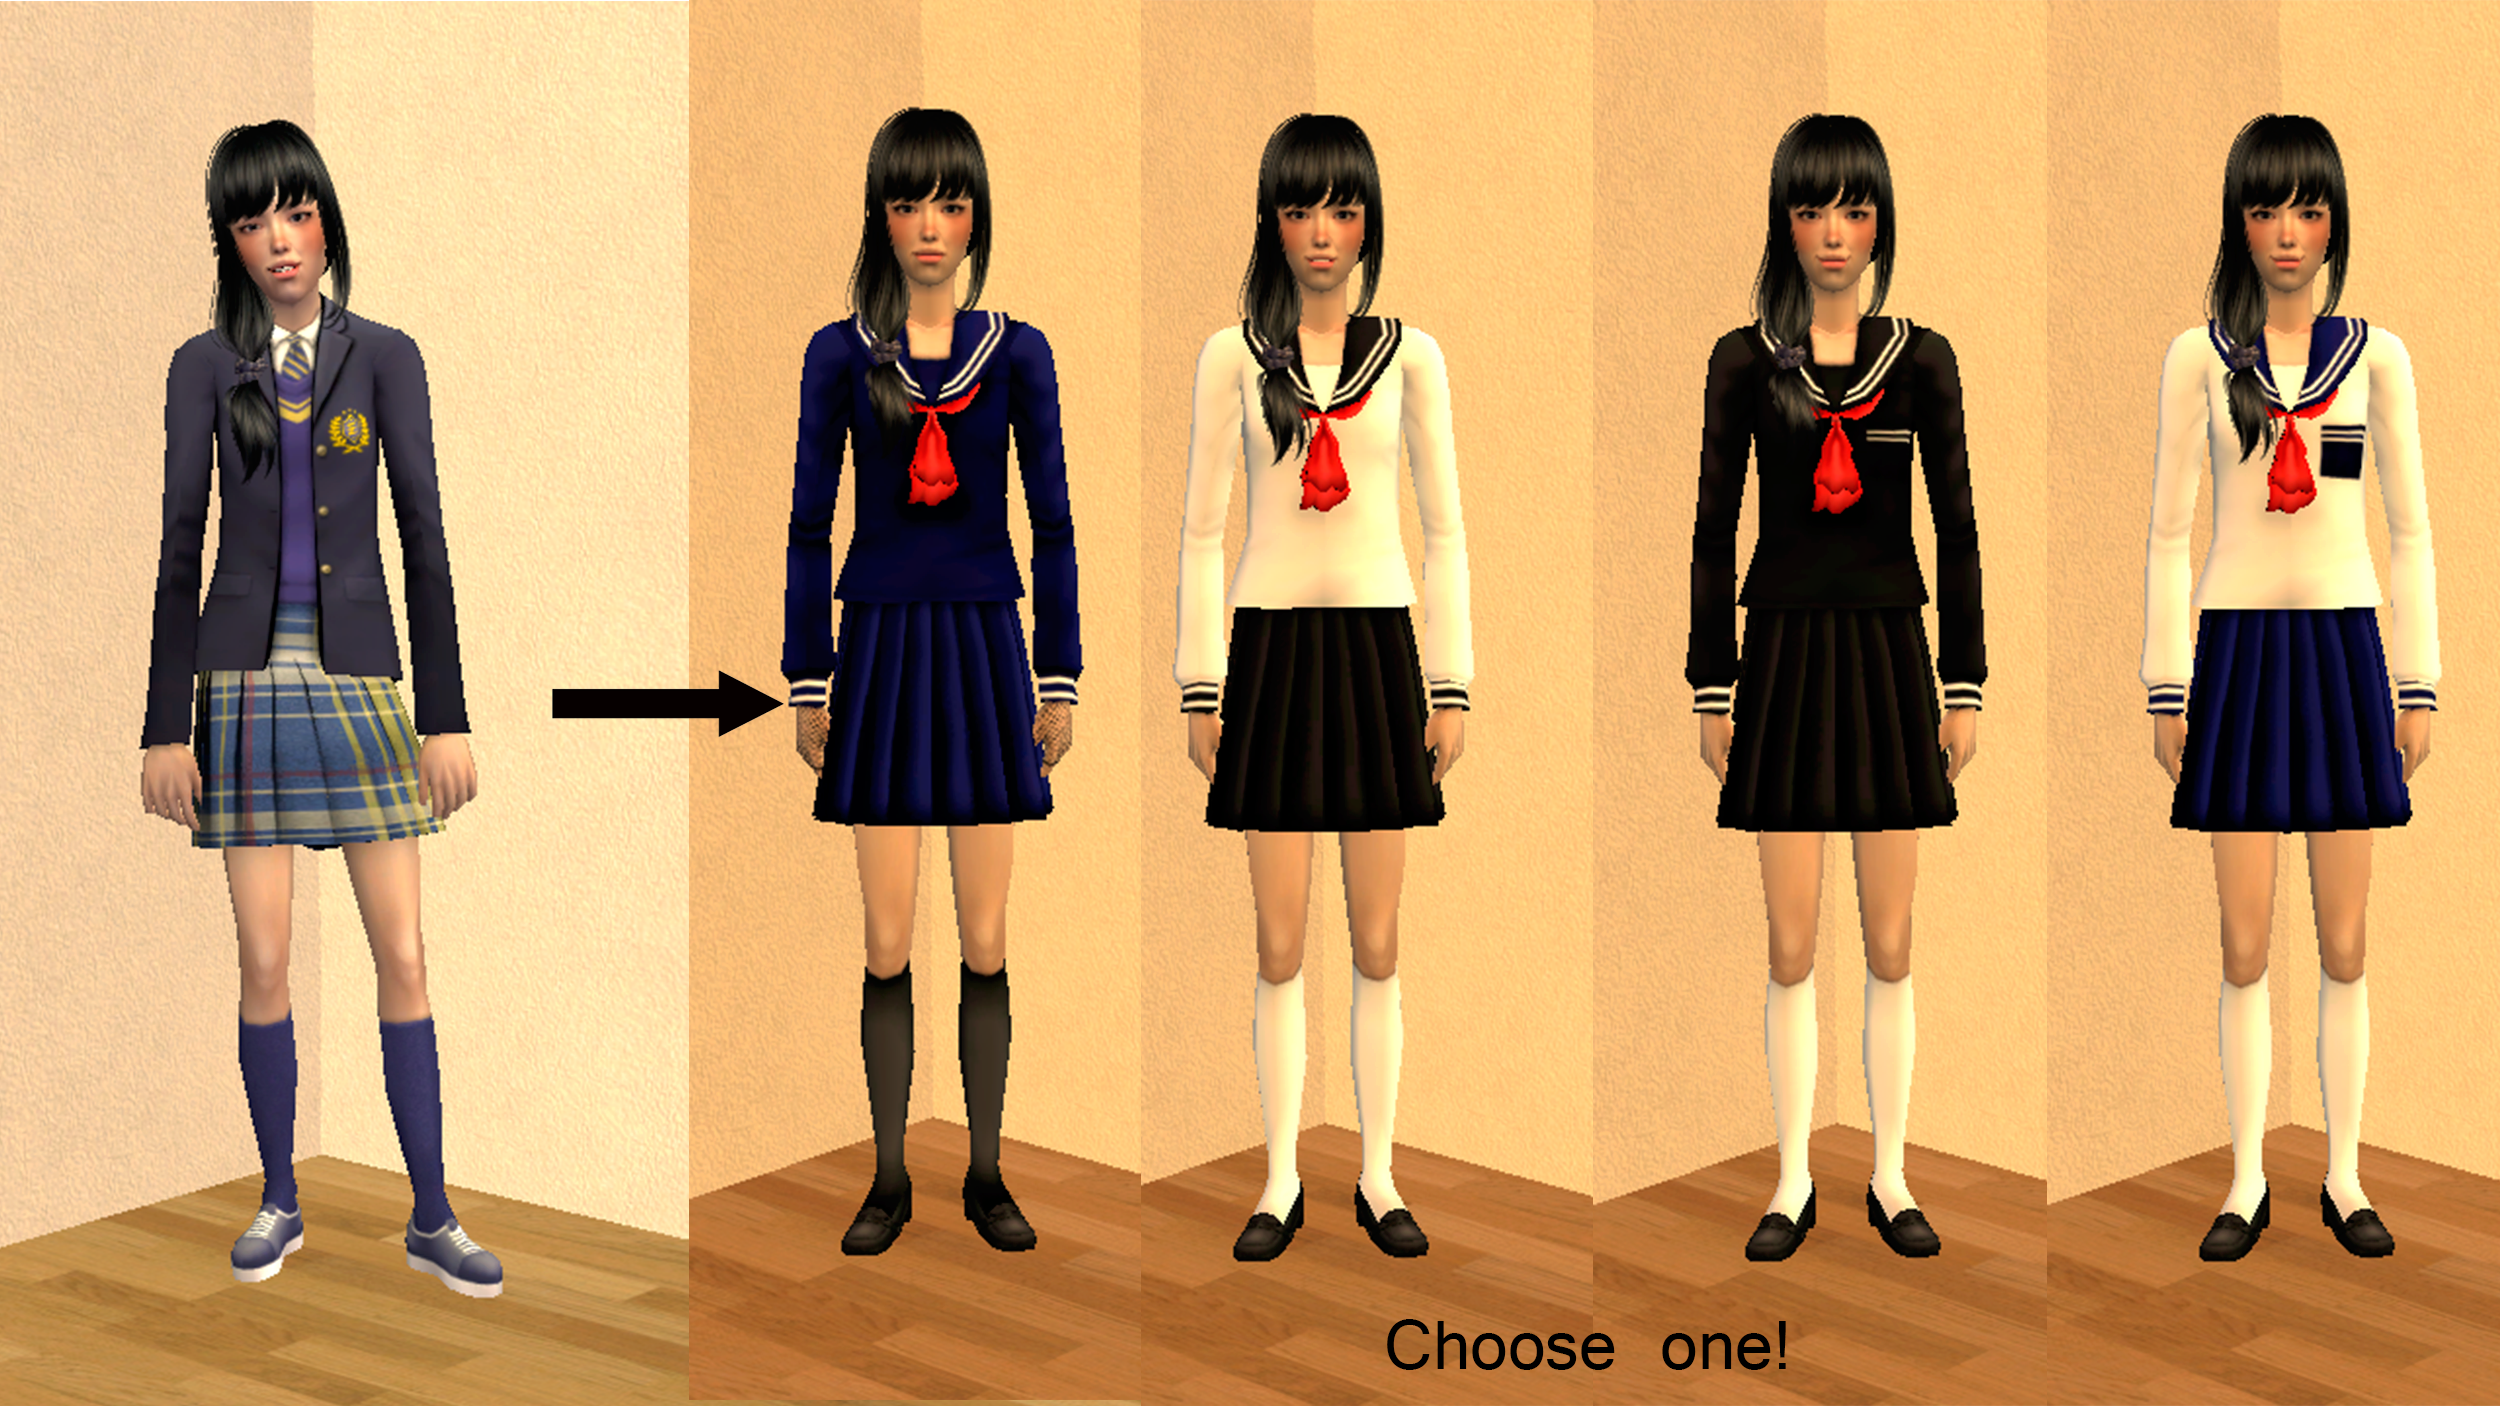 Japan teen school. SIMS 4 японская Школьная форма. SIMS 4 Sailor uniform. Японская Школьная форма симс 4.